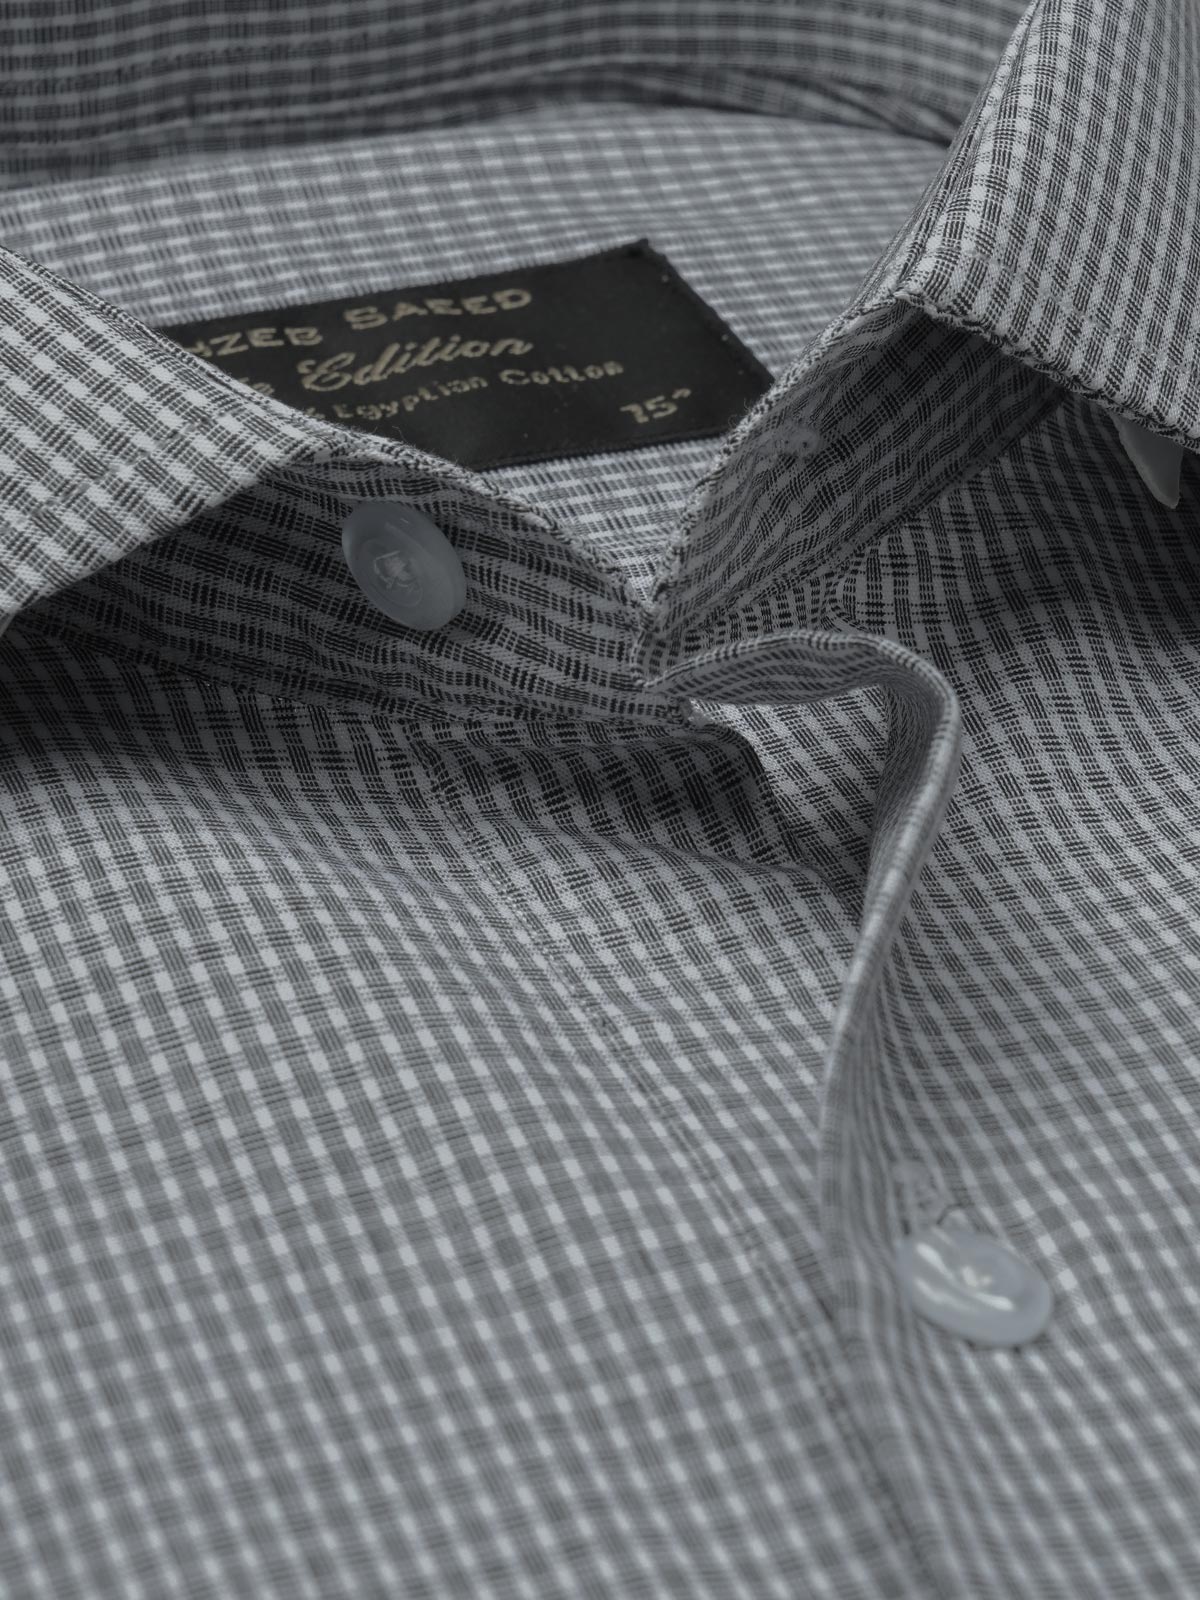 Black & White Self, Elite Edition, Cutaway Collar Men’s Formal Shirt (FS-751)